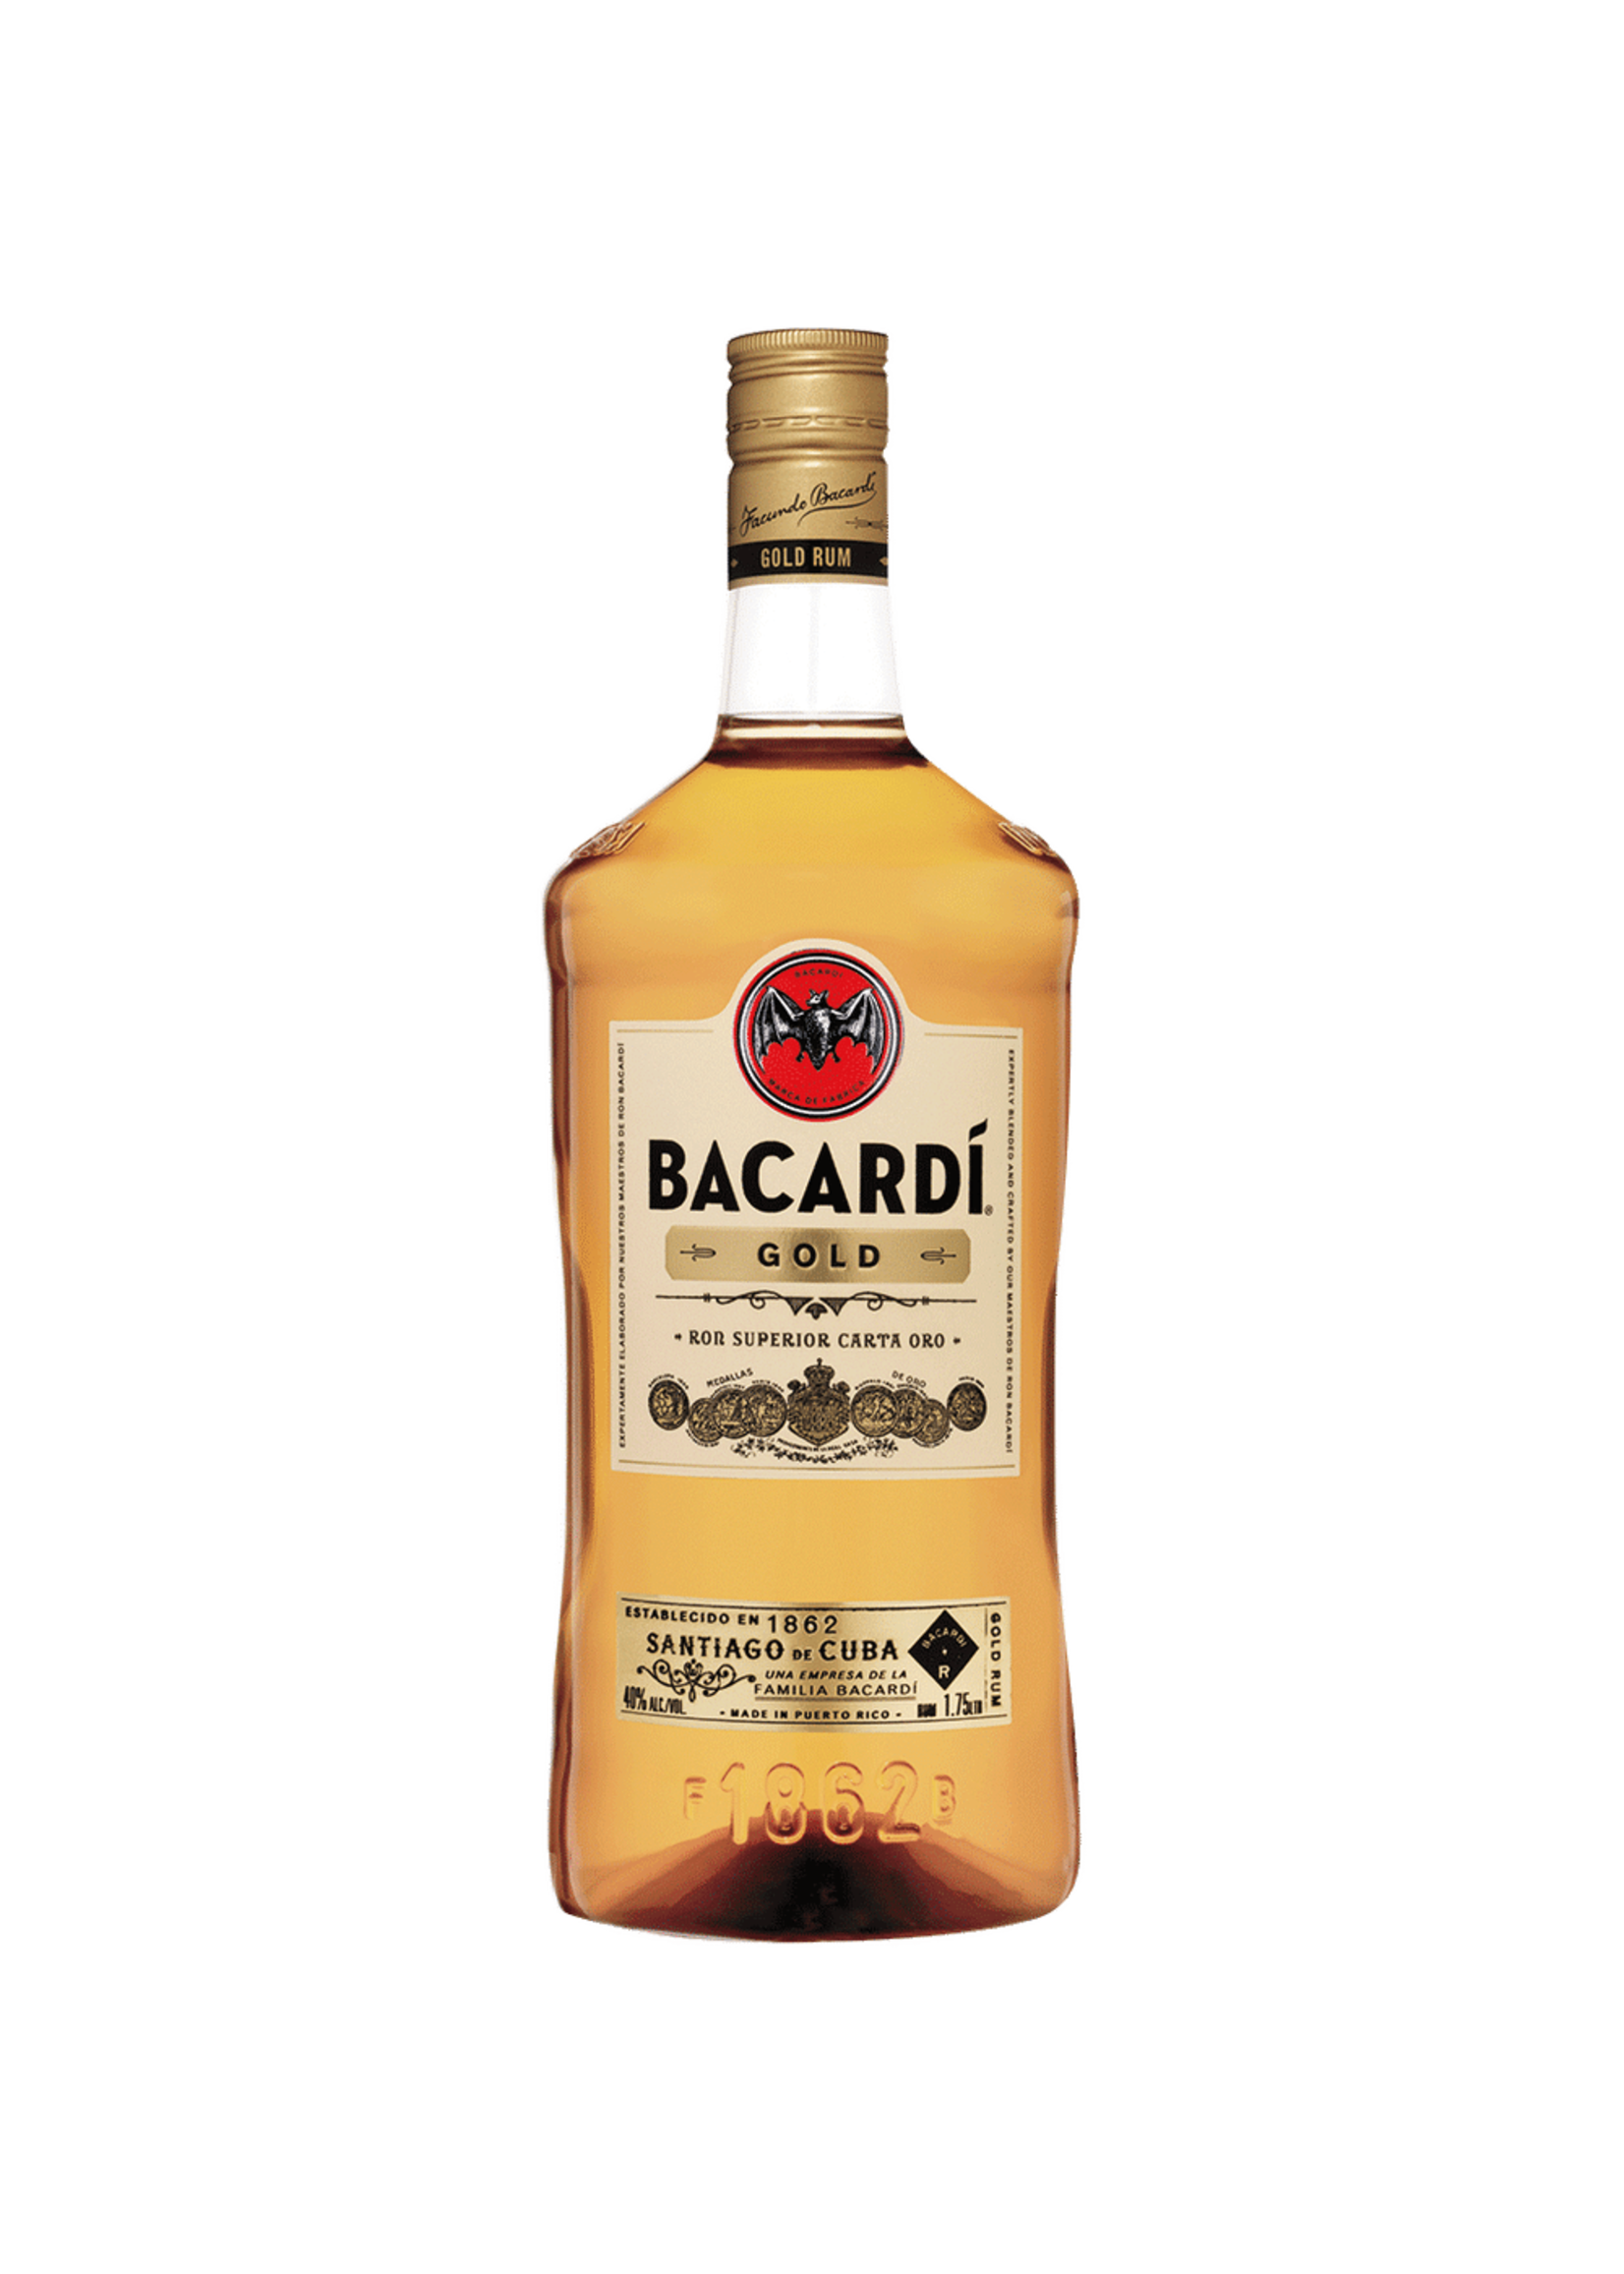 Bacardi Bacardi Gold Rum 80Proof Pet 1.75 Ltr